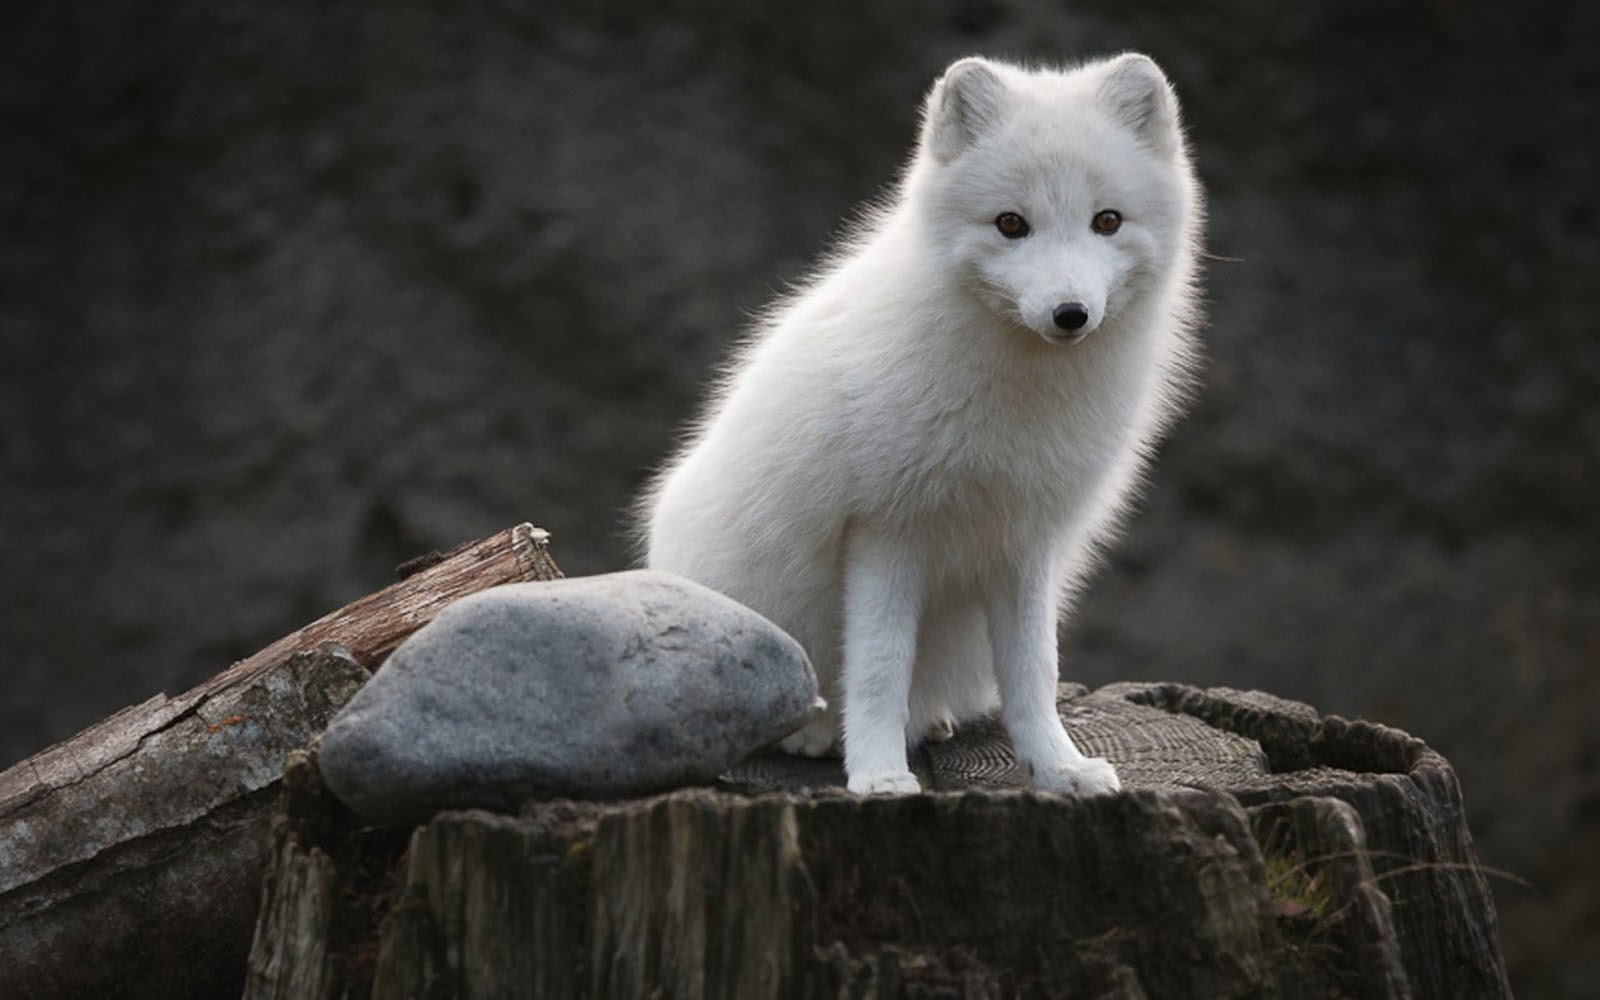 fond d'écran de renard blanc,le renard arctique,canis lupus tundrarum,renard,faune,fourrure